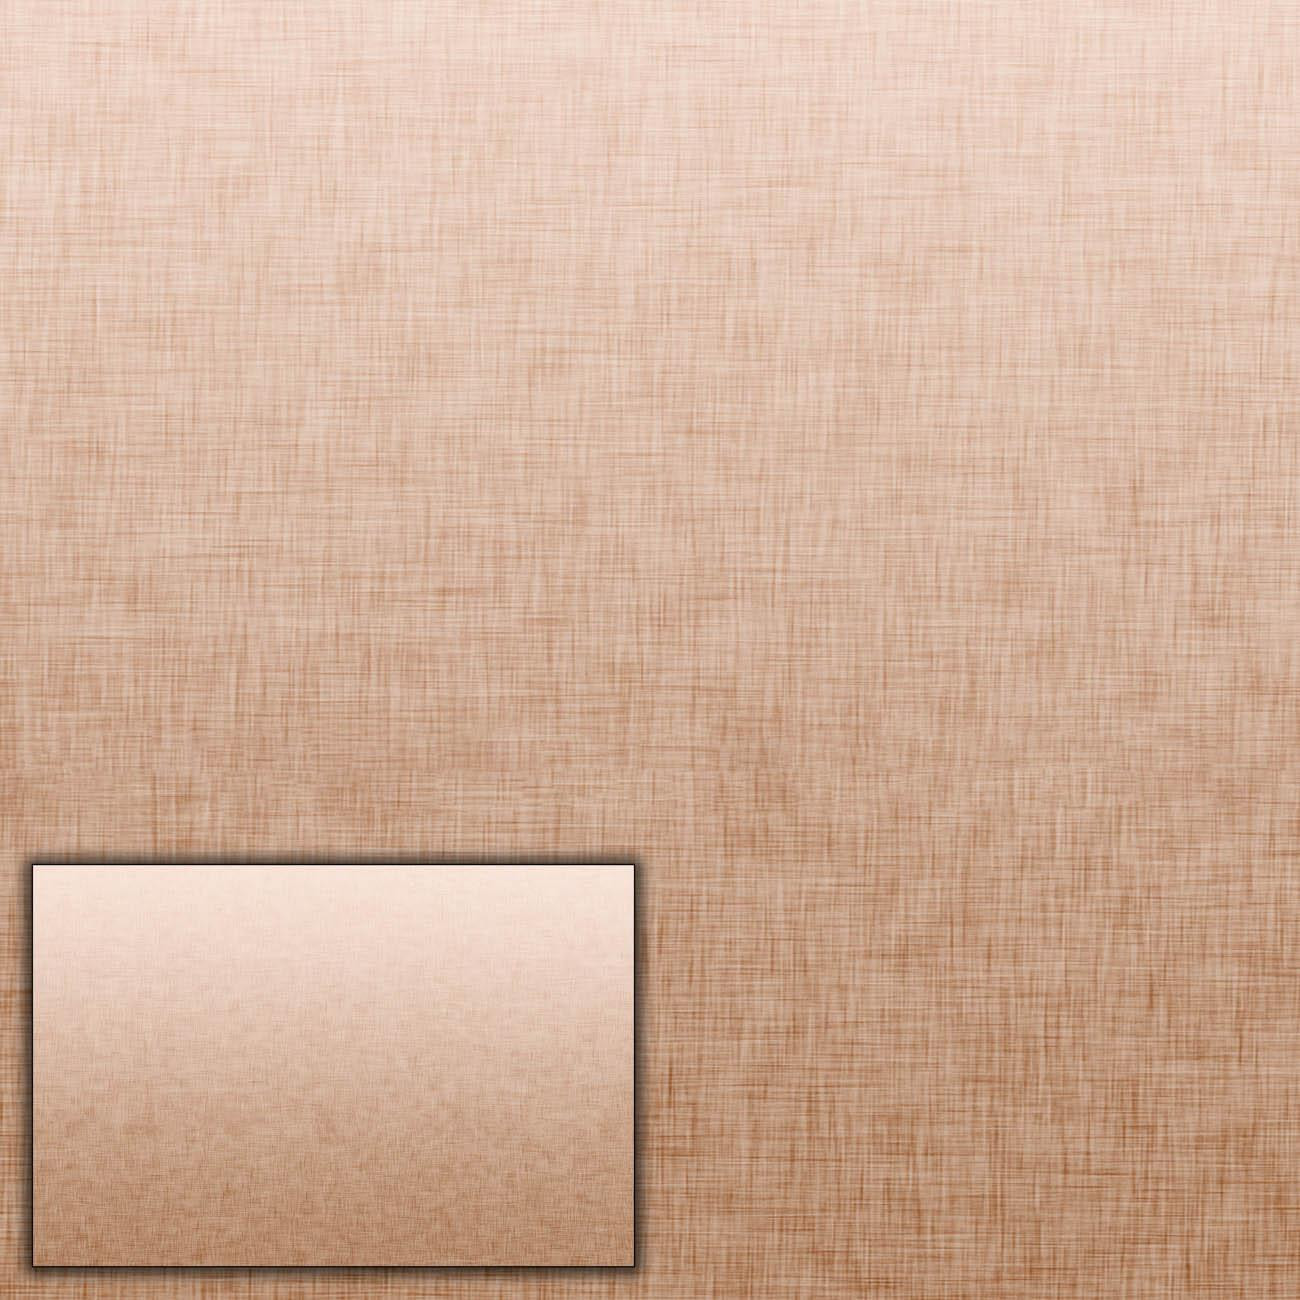 OMBRE / ACID WASH - beige (pale pink) - PANORAMIC PANEL (110cm x 165cm)